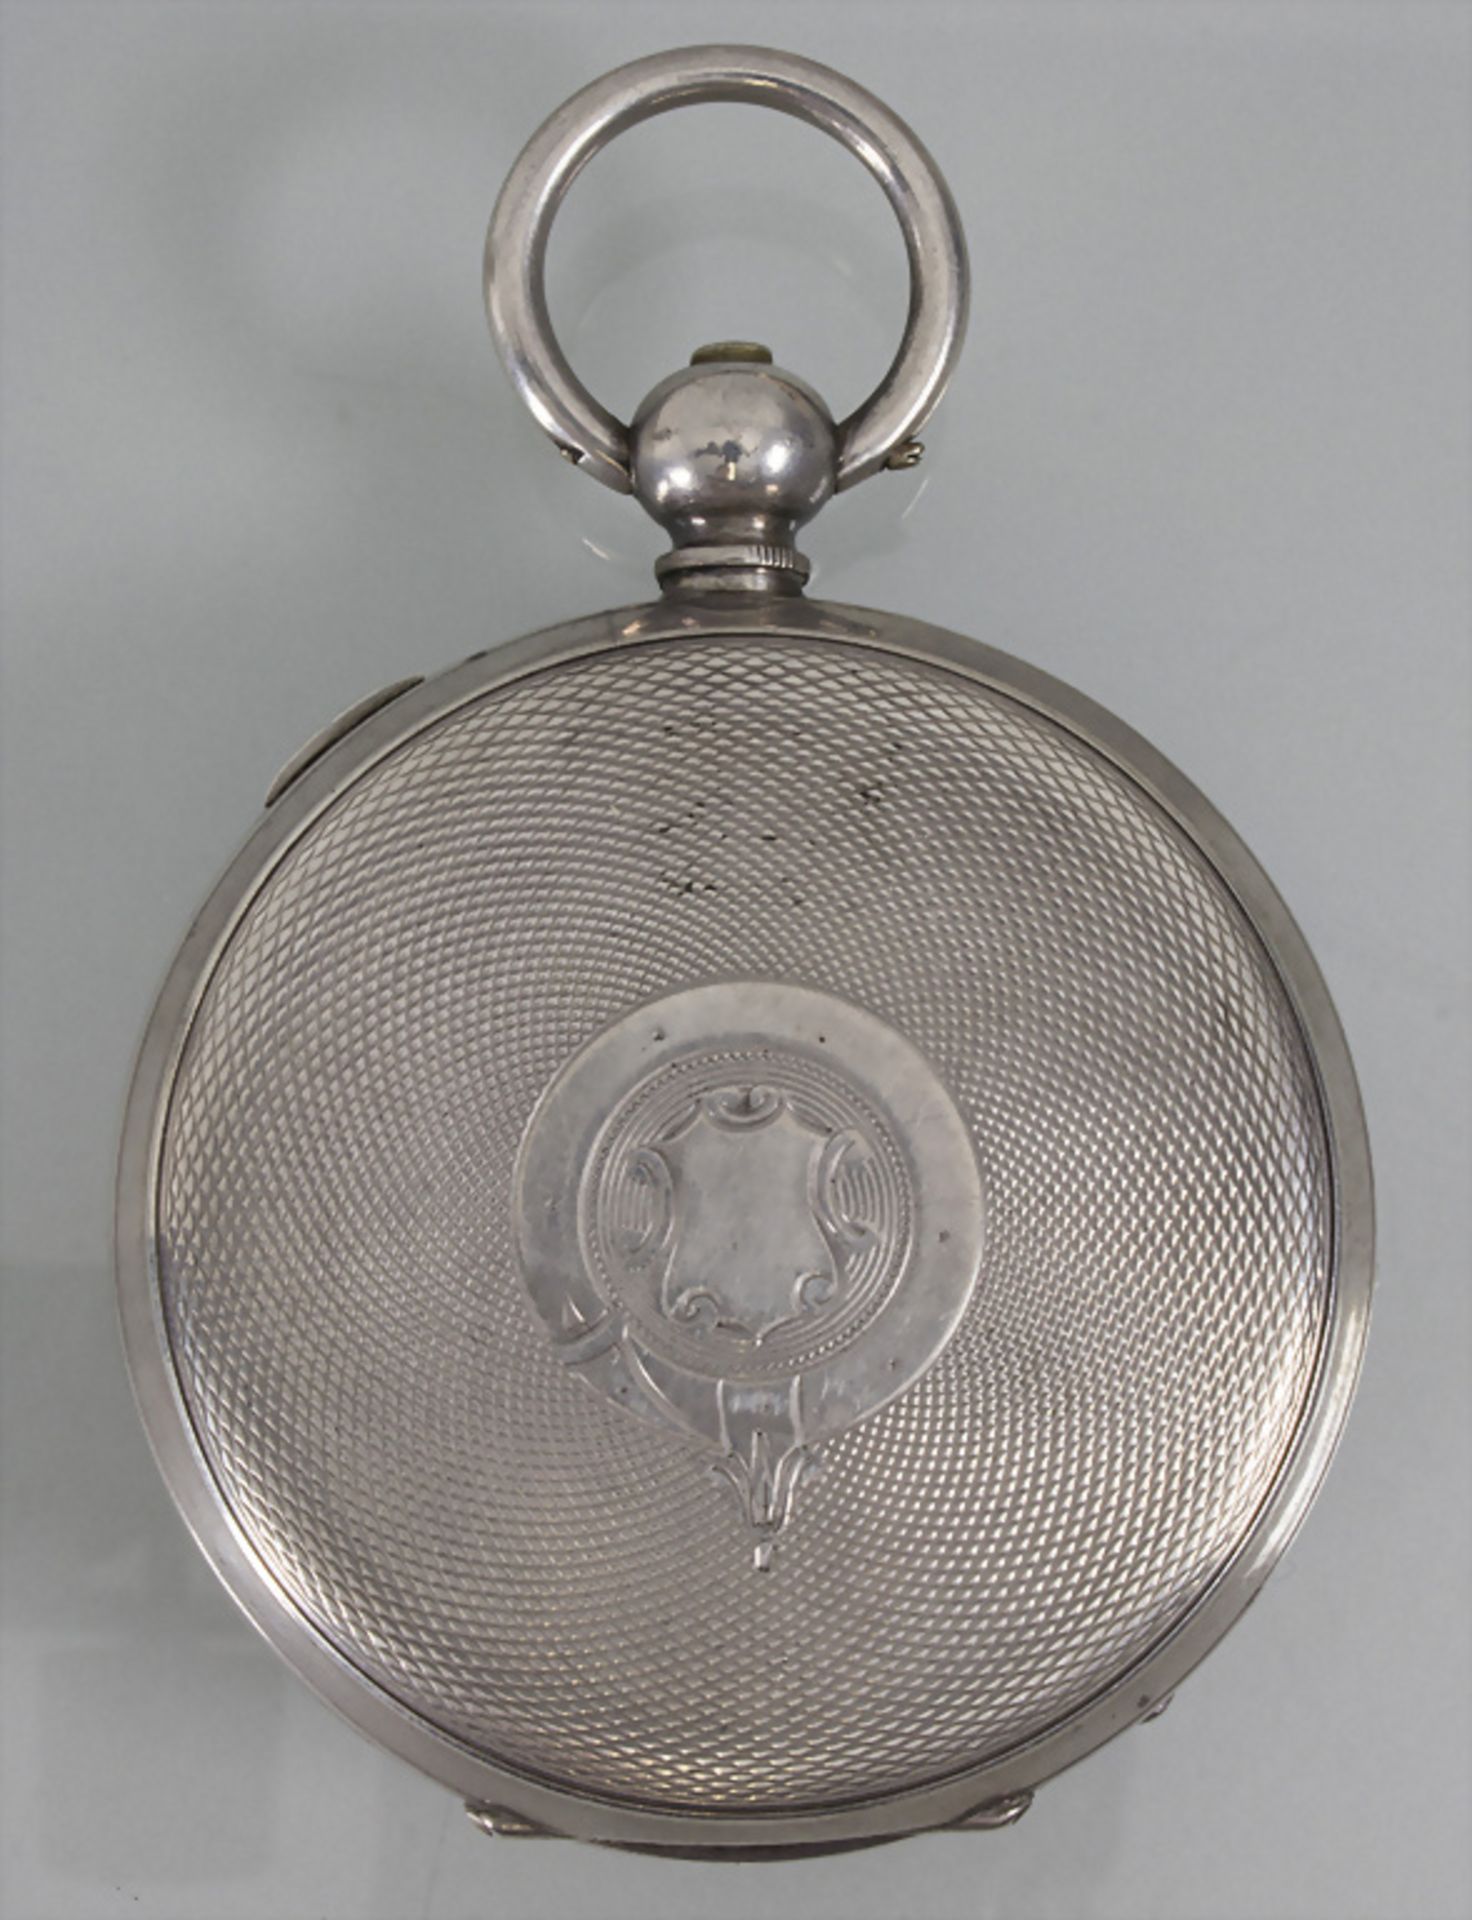 Taschenuhr mit Chronograph / A silver pocket watch with chronograph, Schweiz, 19. Jh. - Image 4 of 4